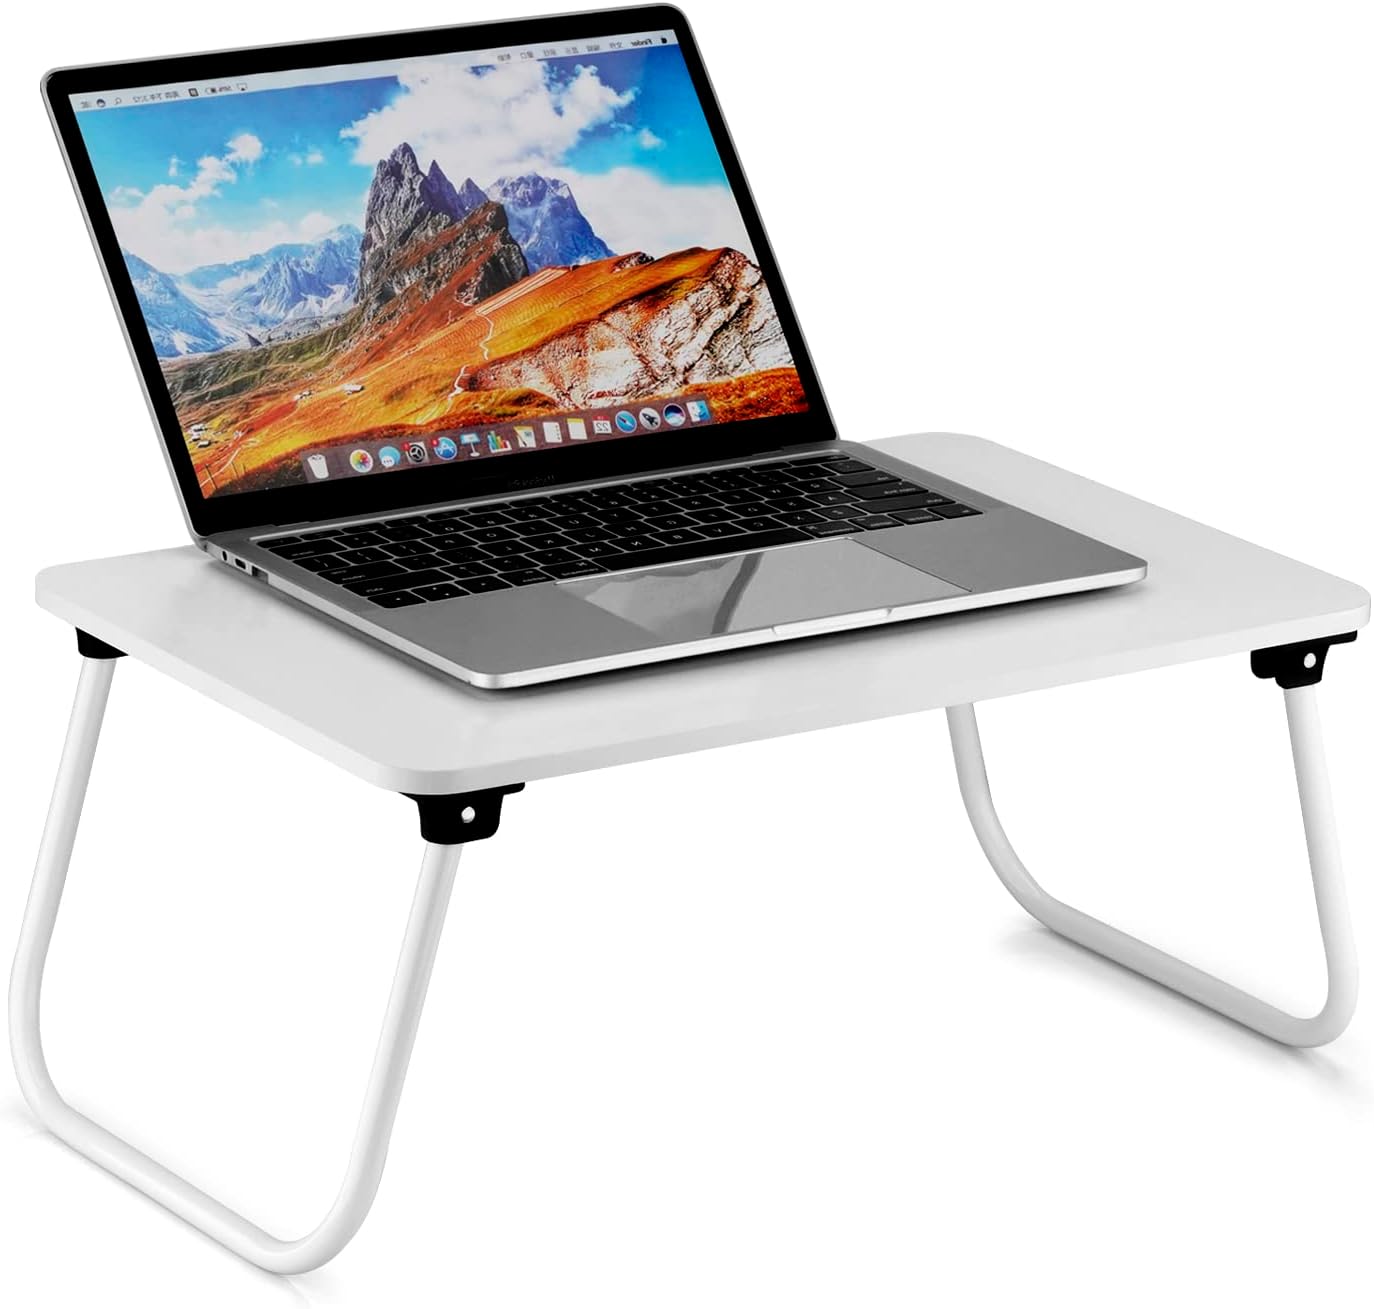 Folding Lap Desk, Ruxury Laptop Stand Bed Desk Table [...]